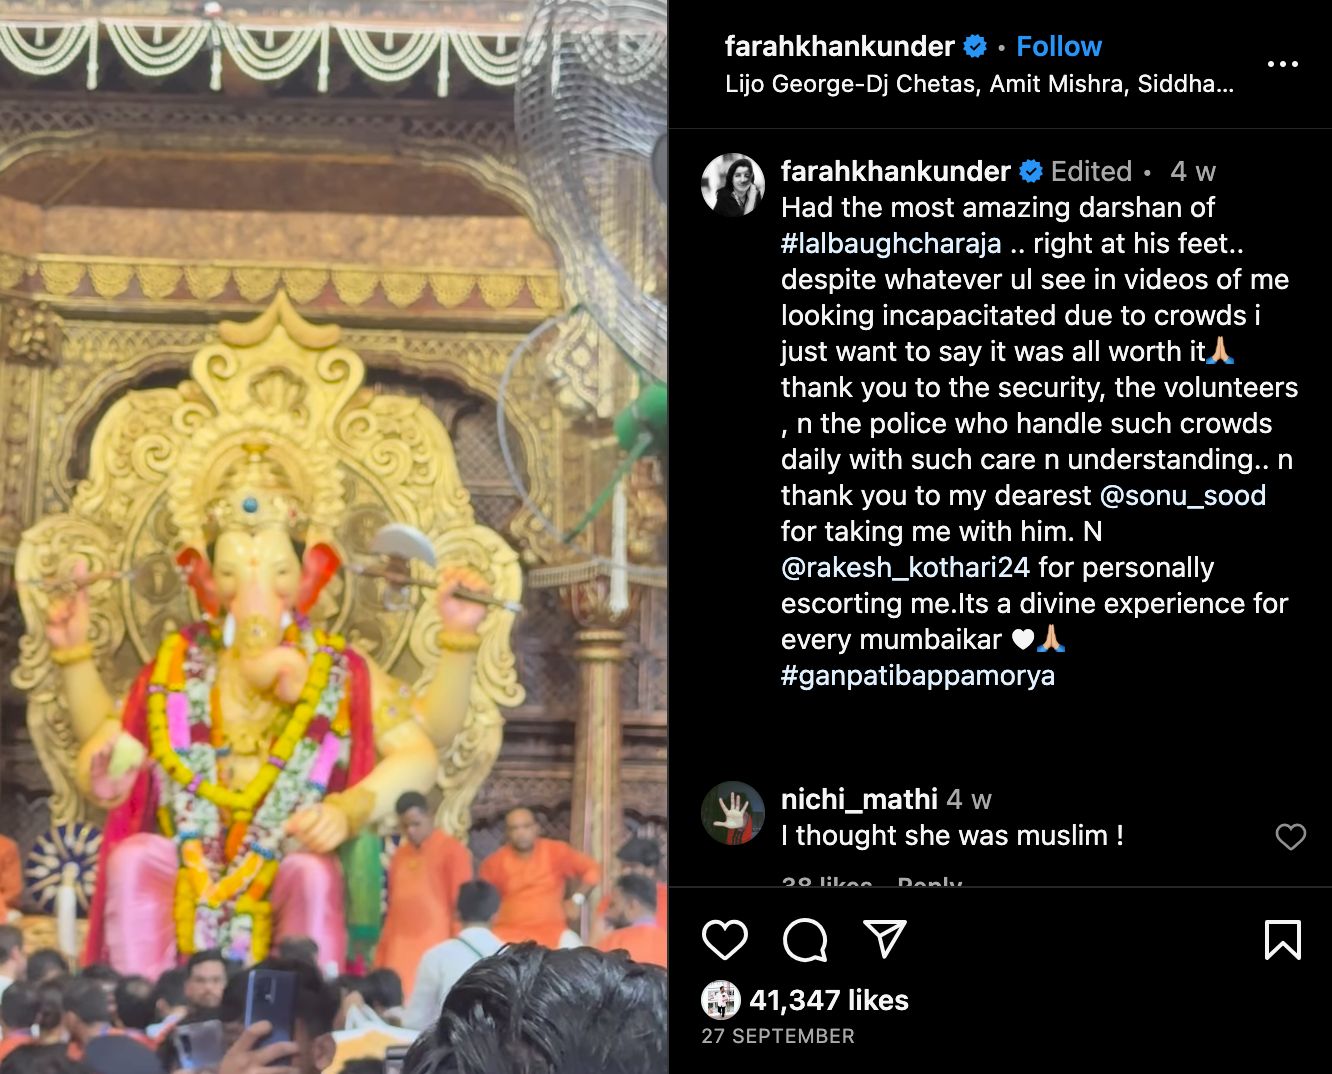 Farah Khan's Instagram post about her Lalbaugcha Raja pandal visit